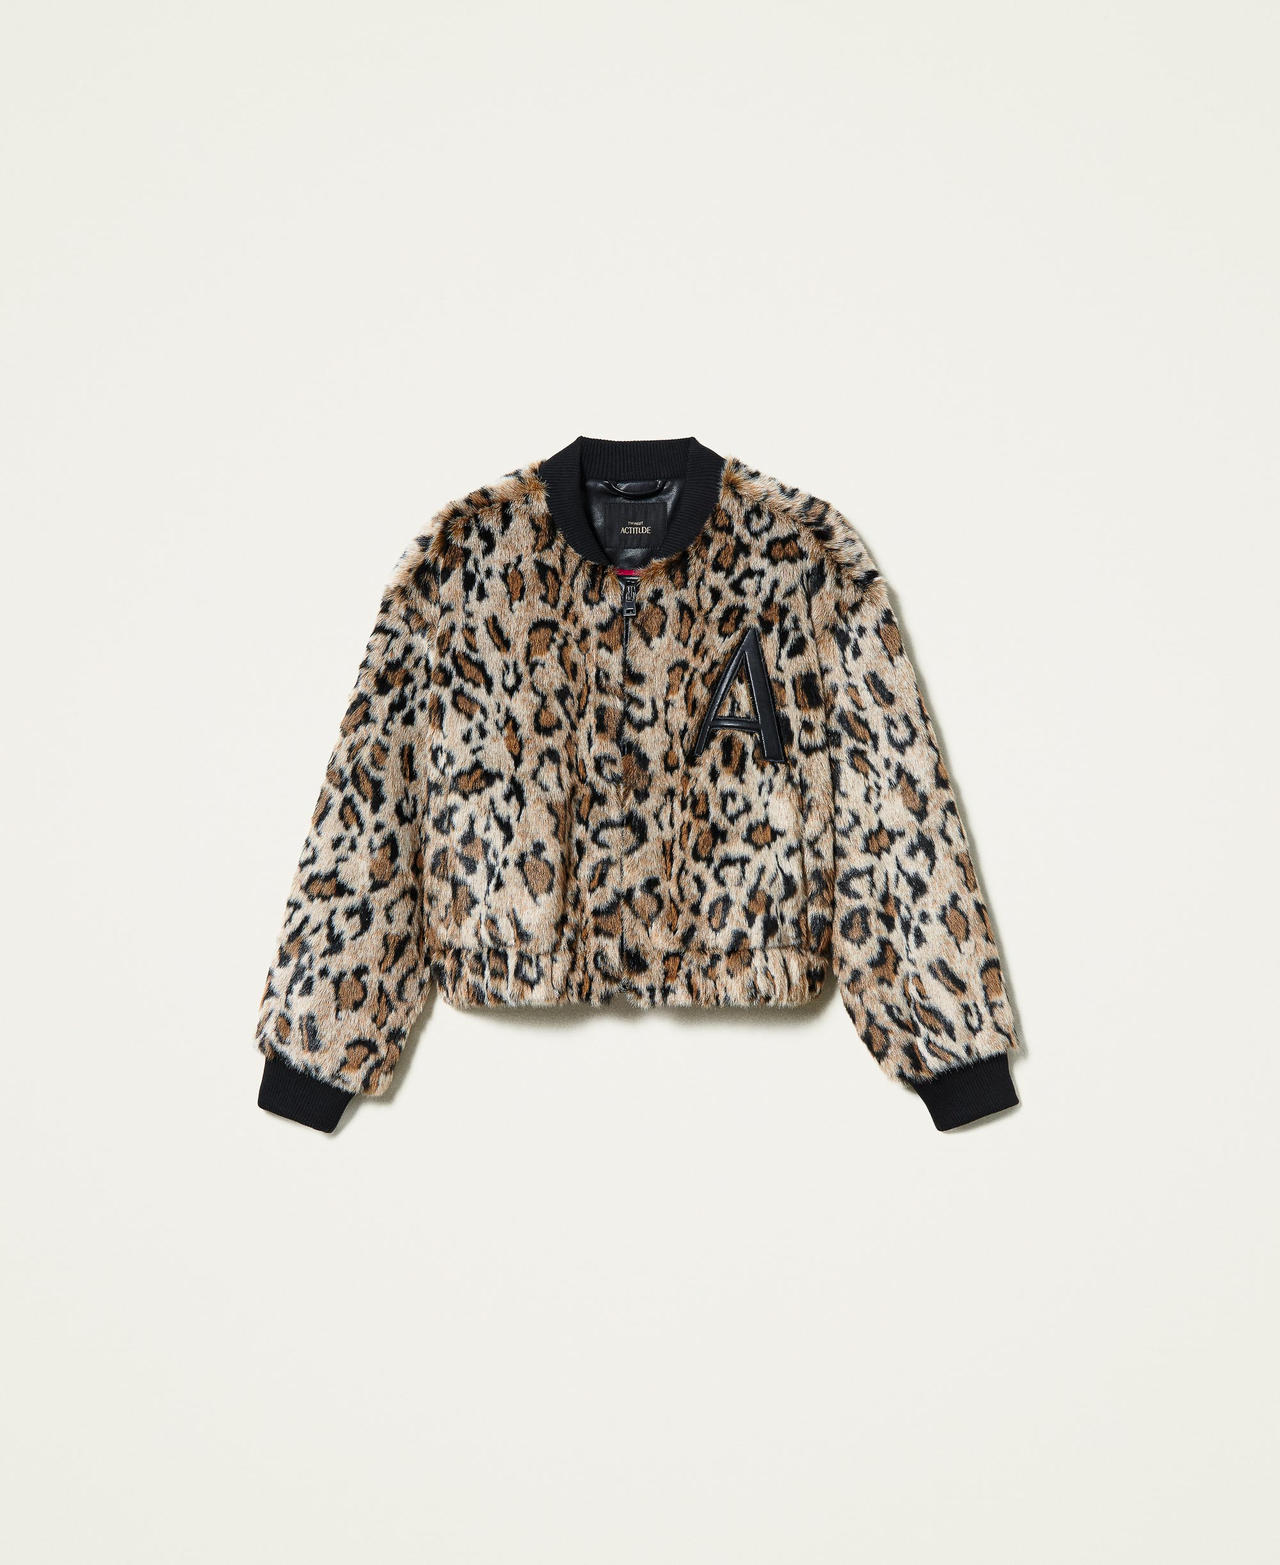 ‘Amber’ animal print jacquard bomber jacket Jaguar Print Woman 212AT2170-0S